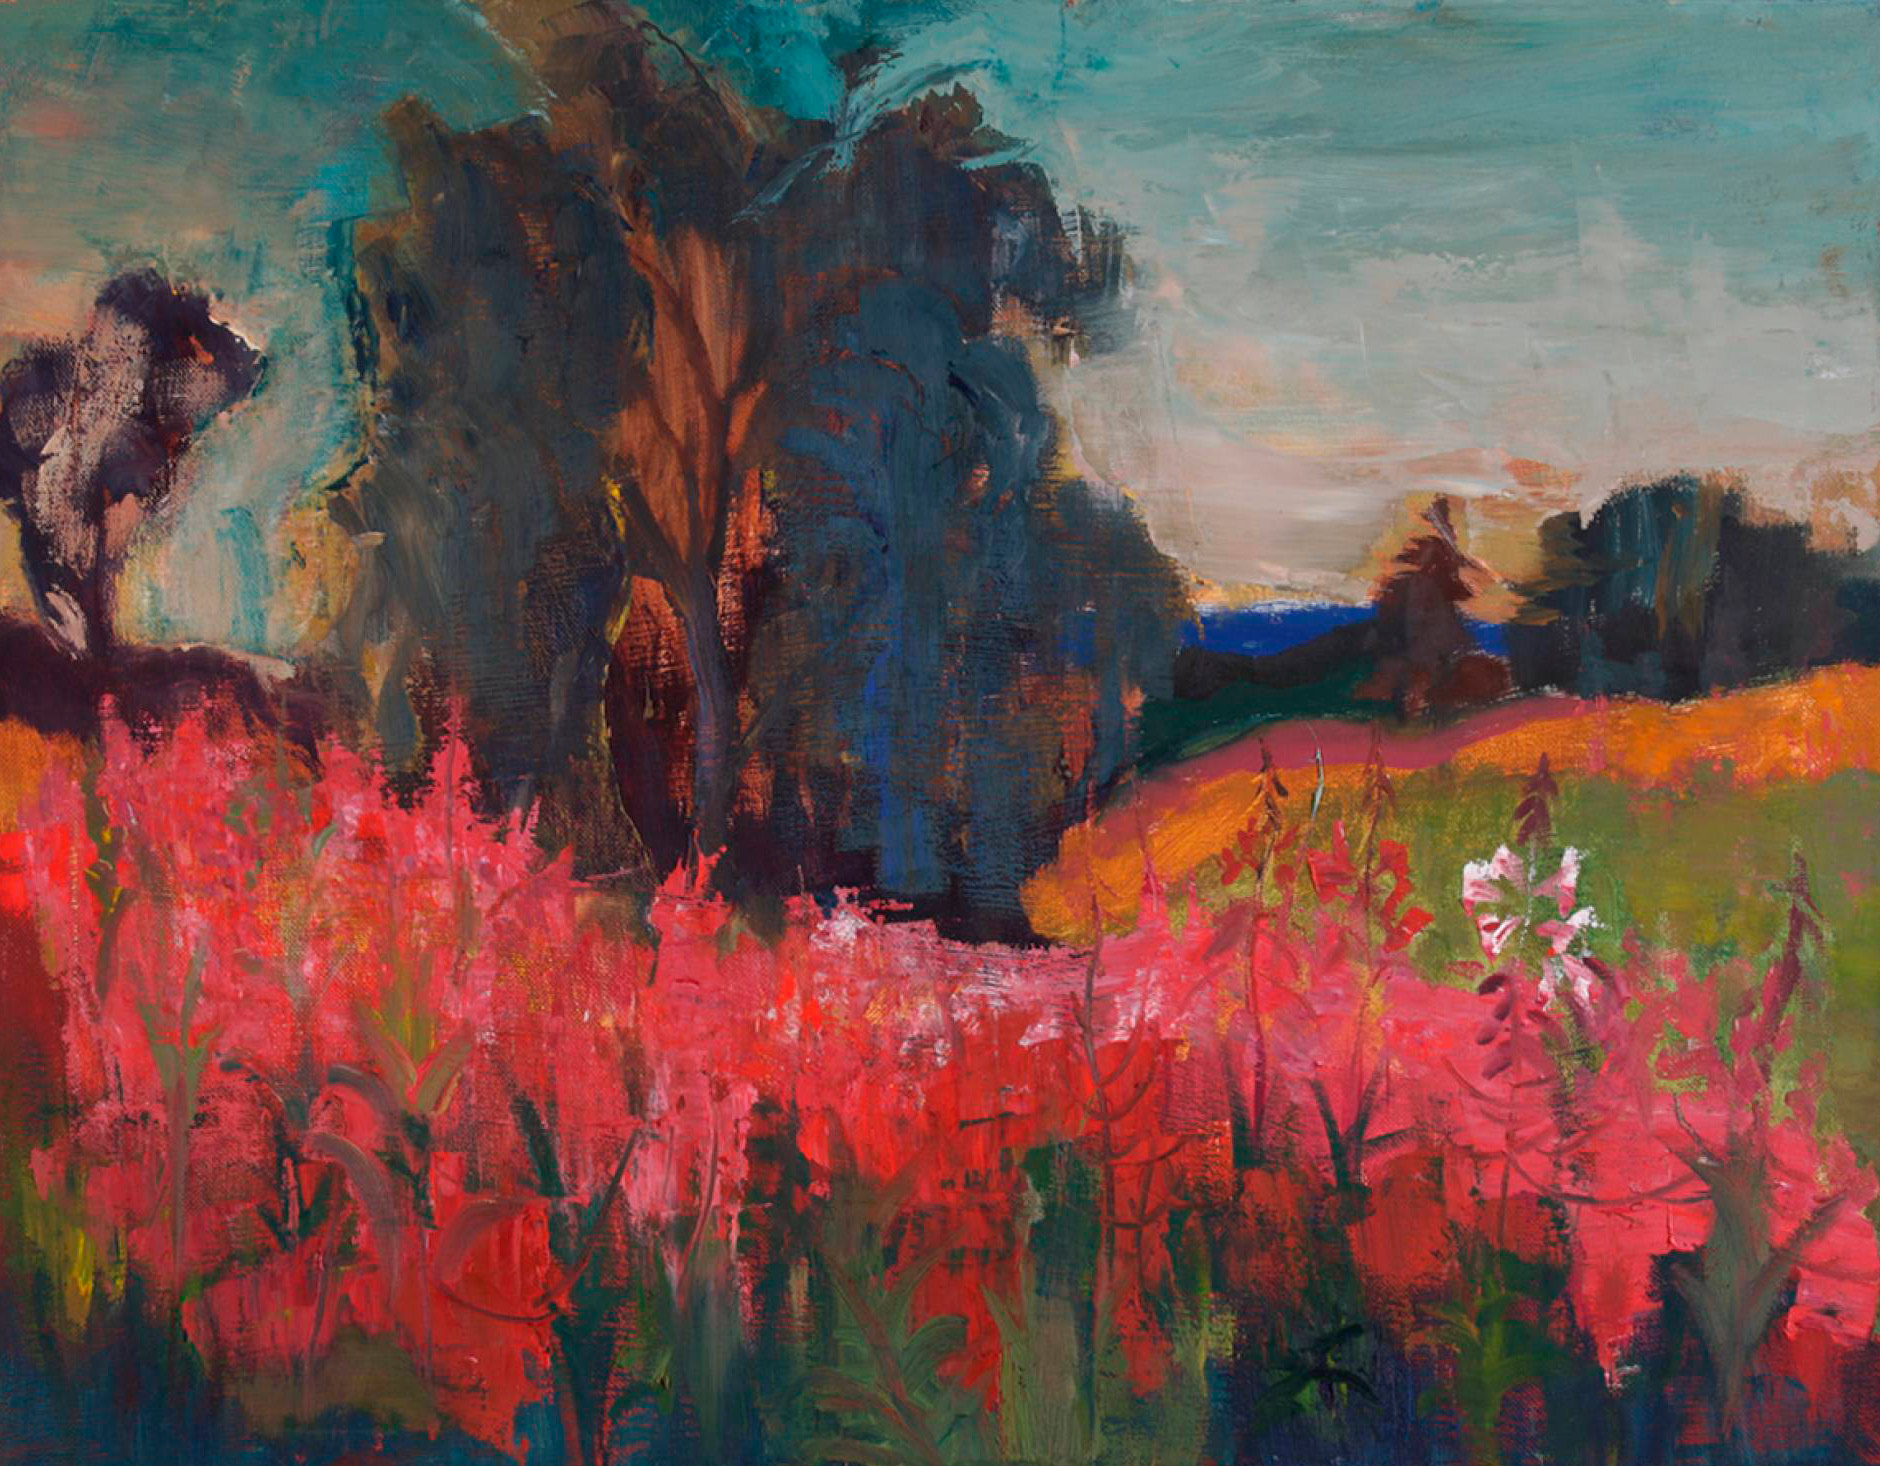 Blooming field, Kirill Leshchinsky, Buy the painting Oil